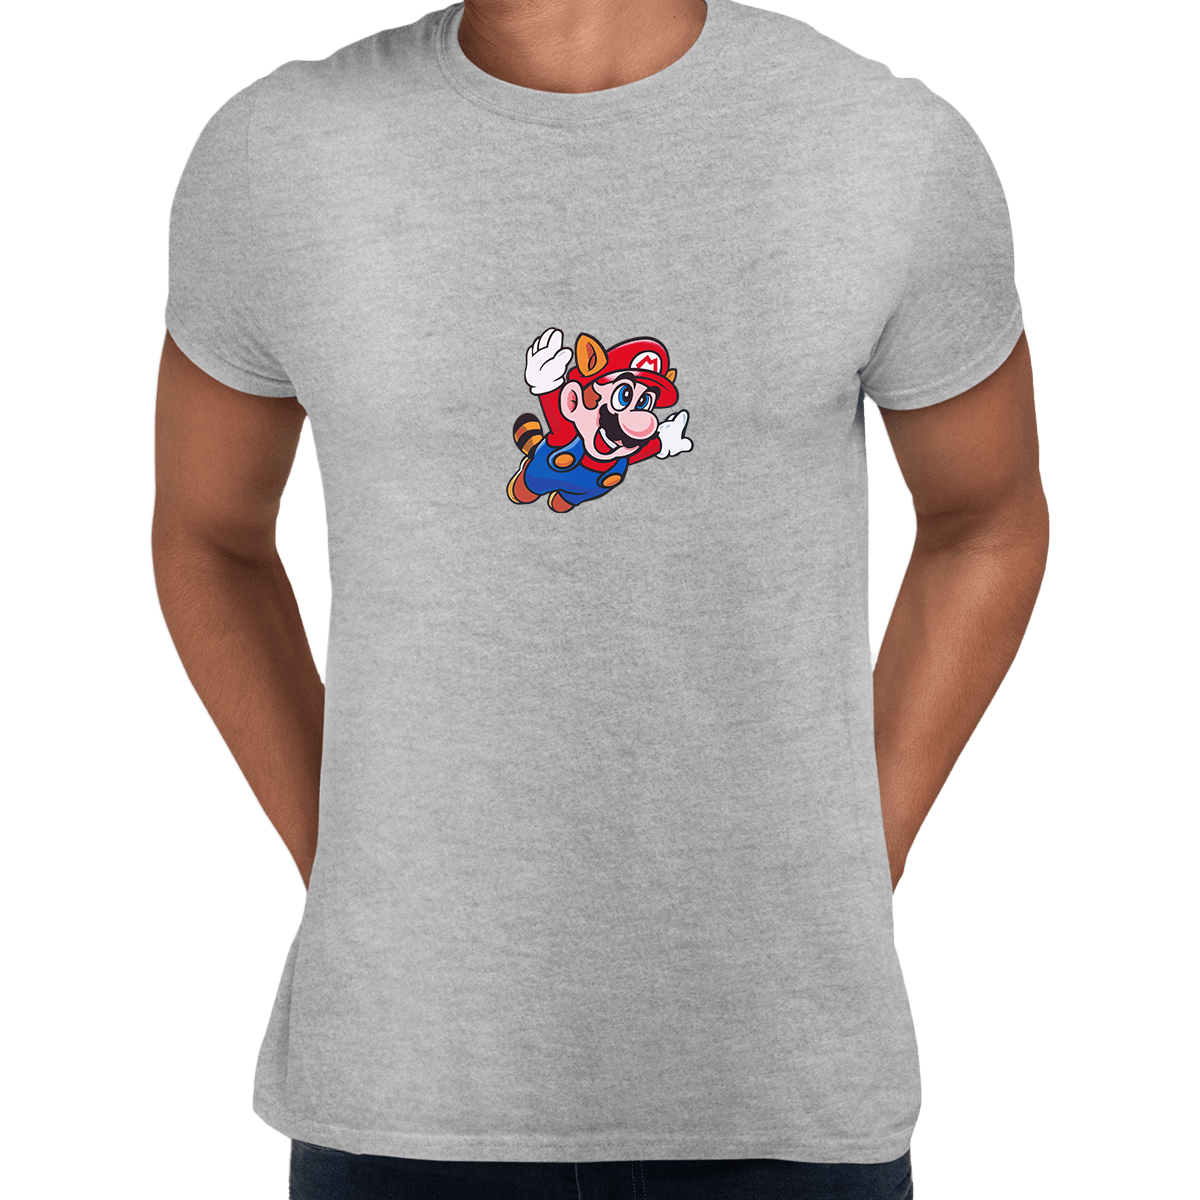 Flying Mario Bross Nintendo Mens Retro Unisex T-Shirts OLD SKOOL Game Fast Delivery - Kuzi Tees